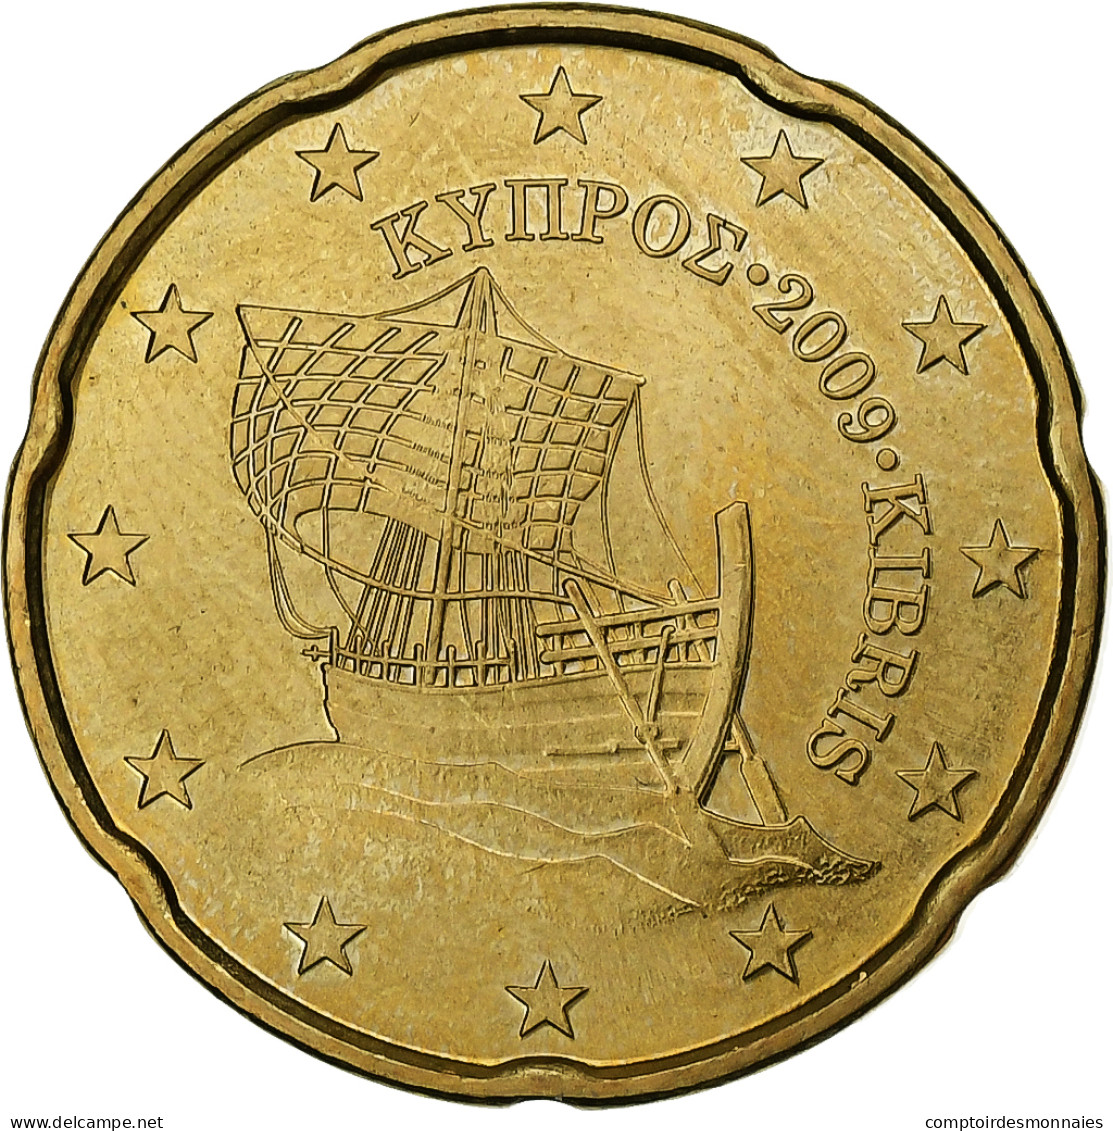 Chypre, 20 Euro Cent, 2009, SUP, Laiton, KM:82 - Cipro